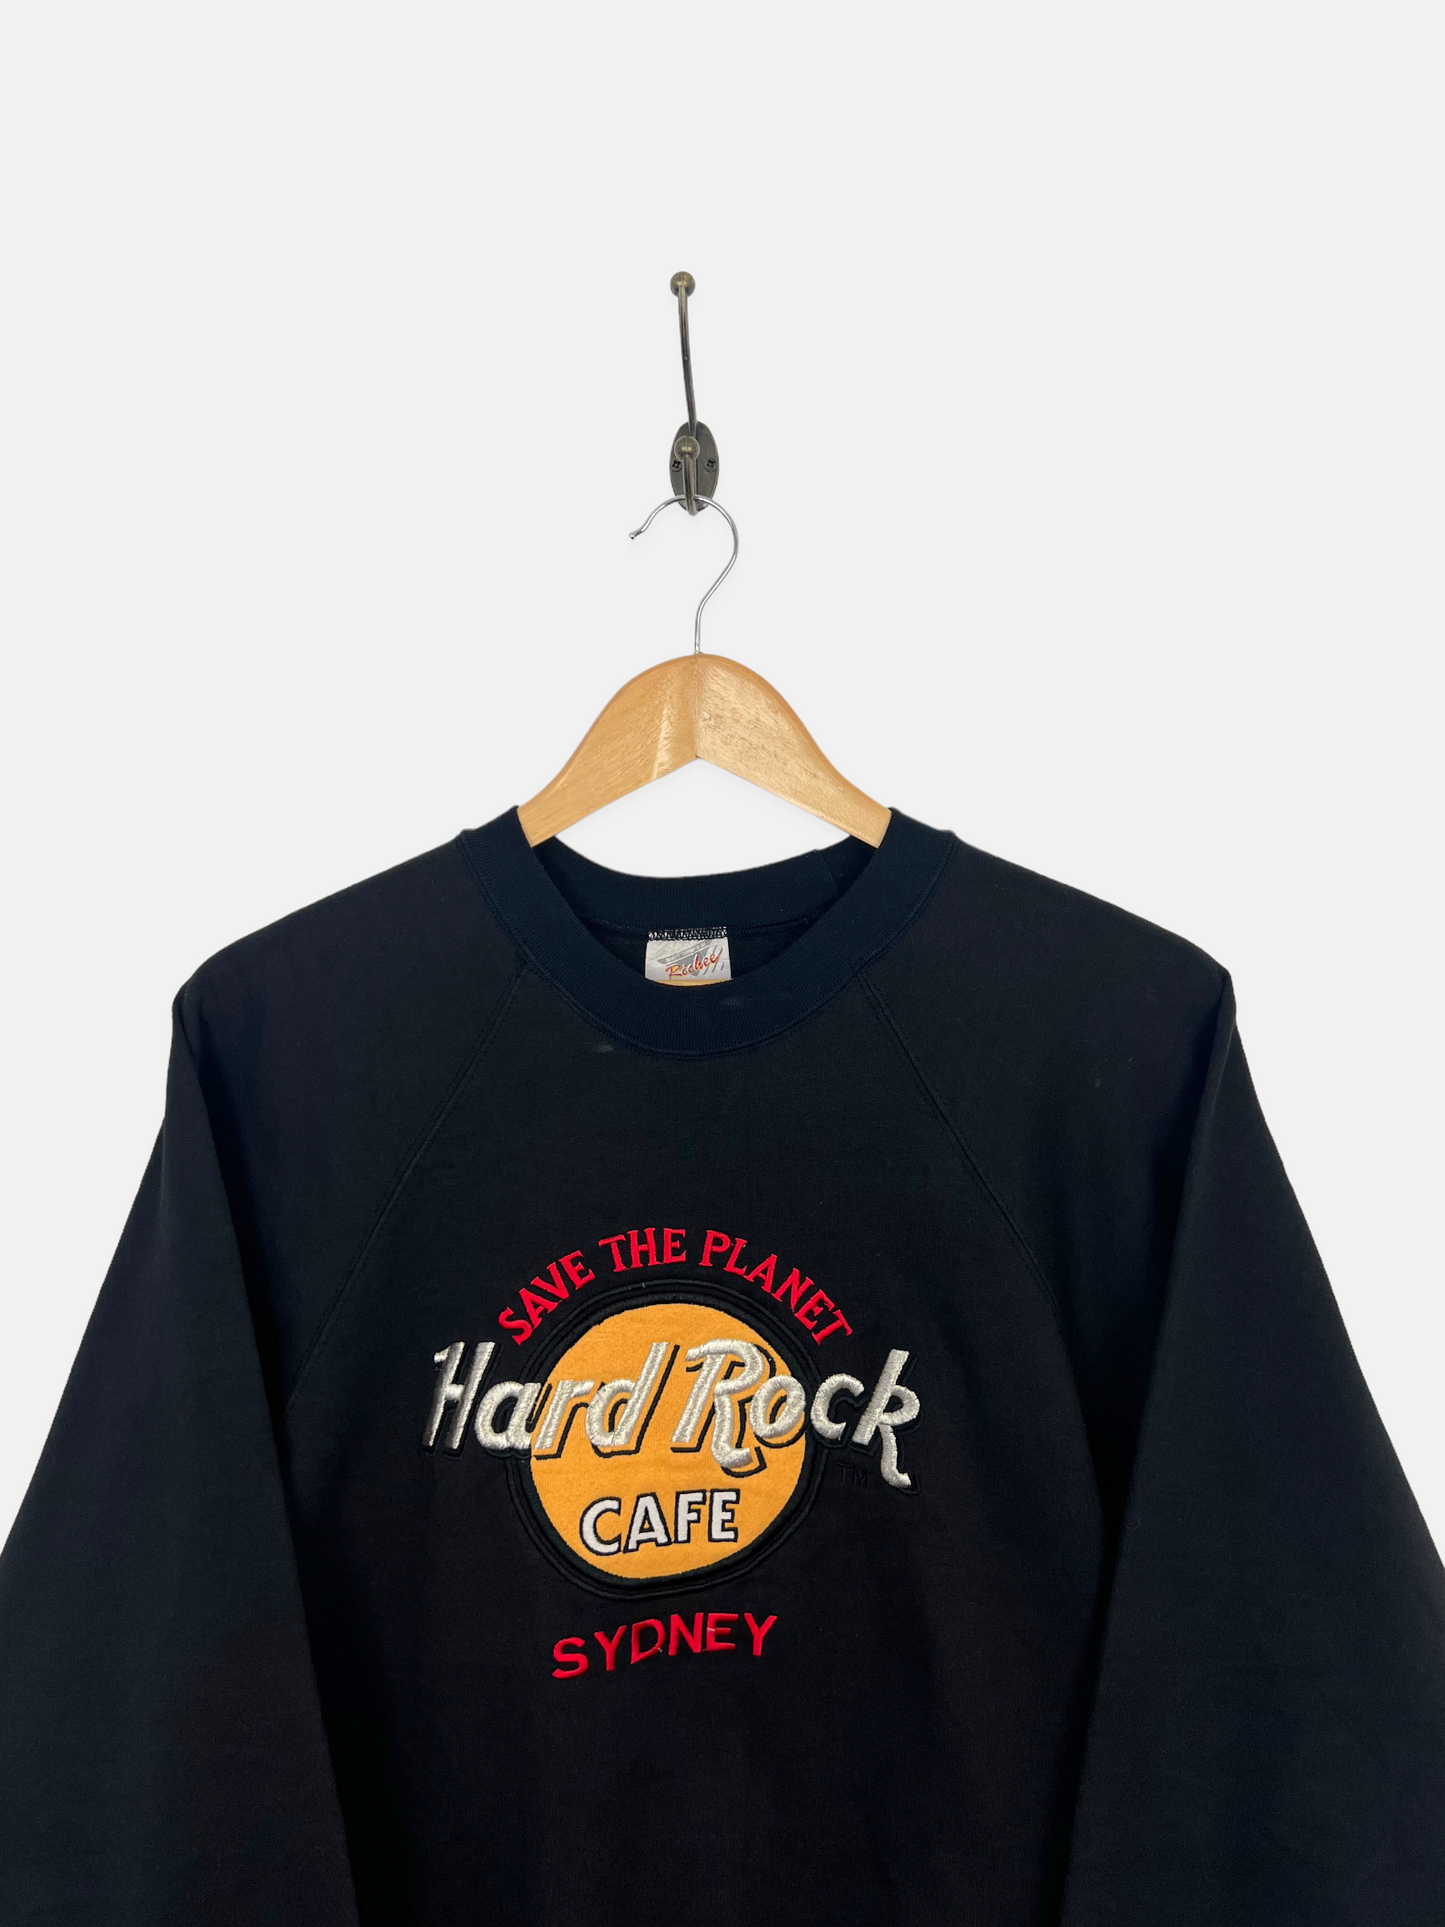 90's Hard Rock Cafe Sydney AUS Made Embroidered Vintage Sweatshirt Size 8